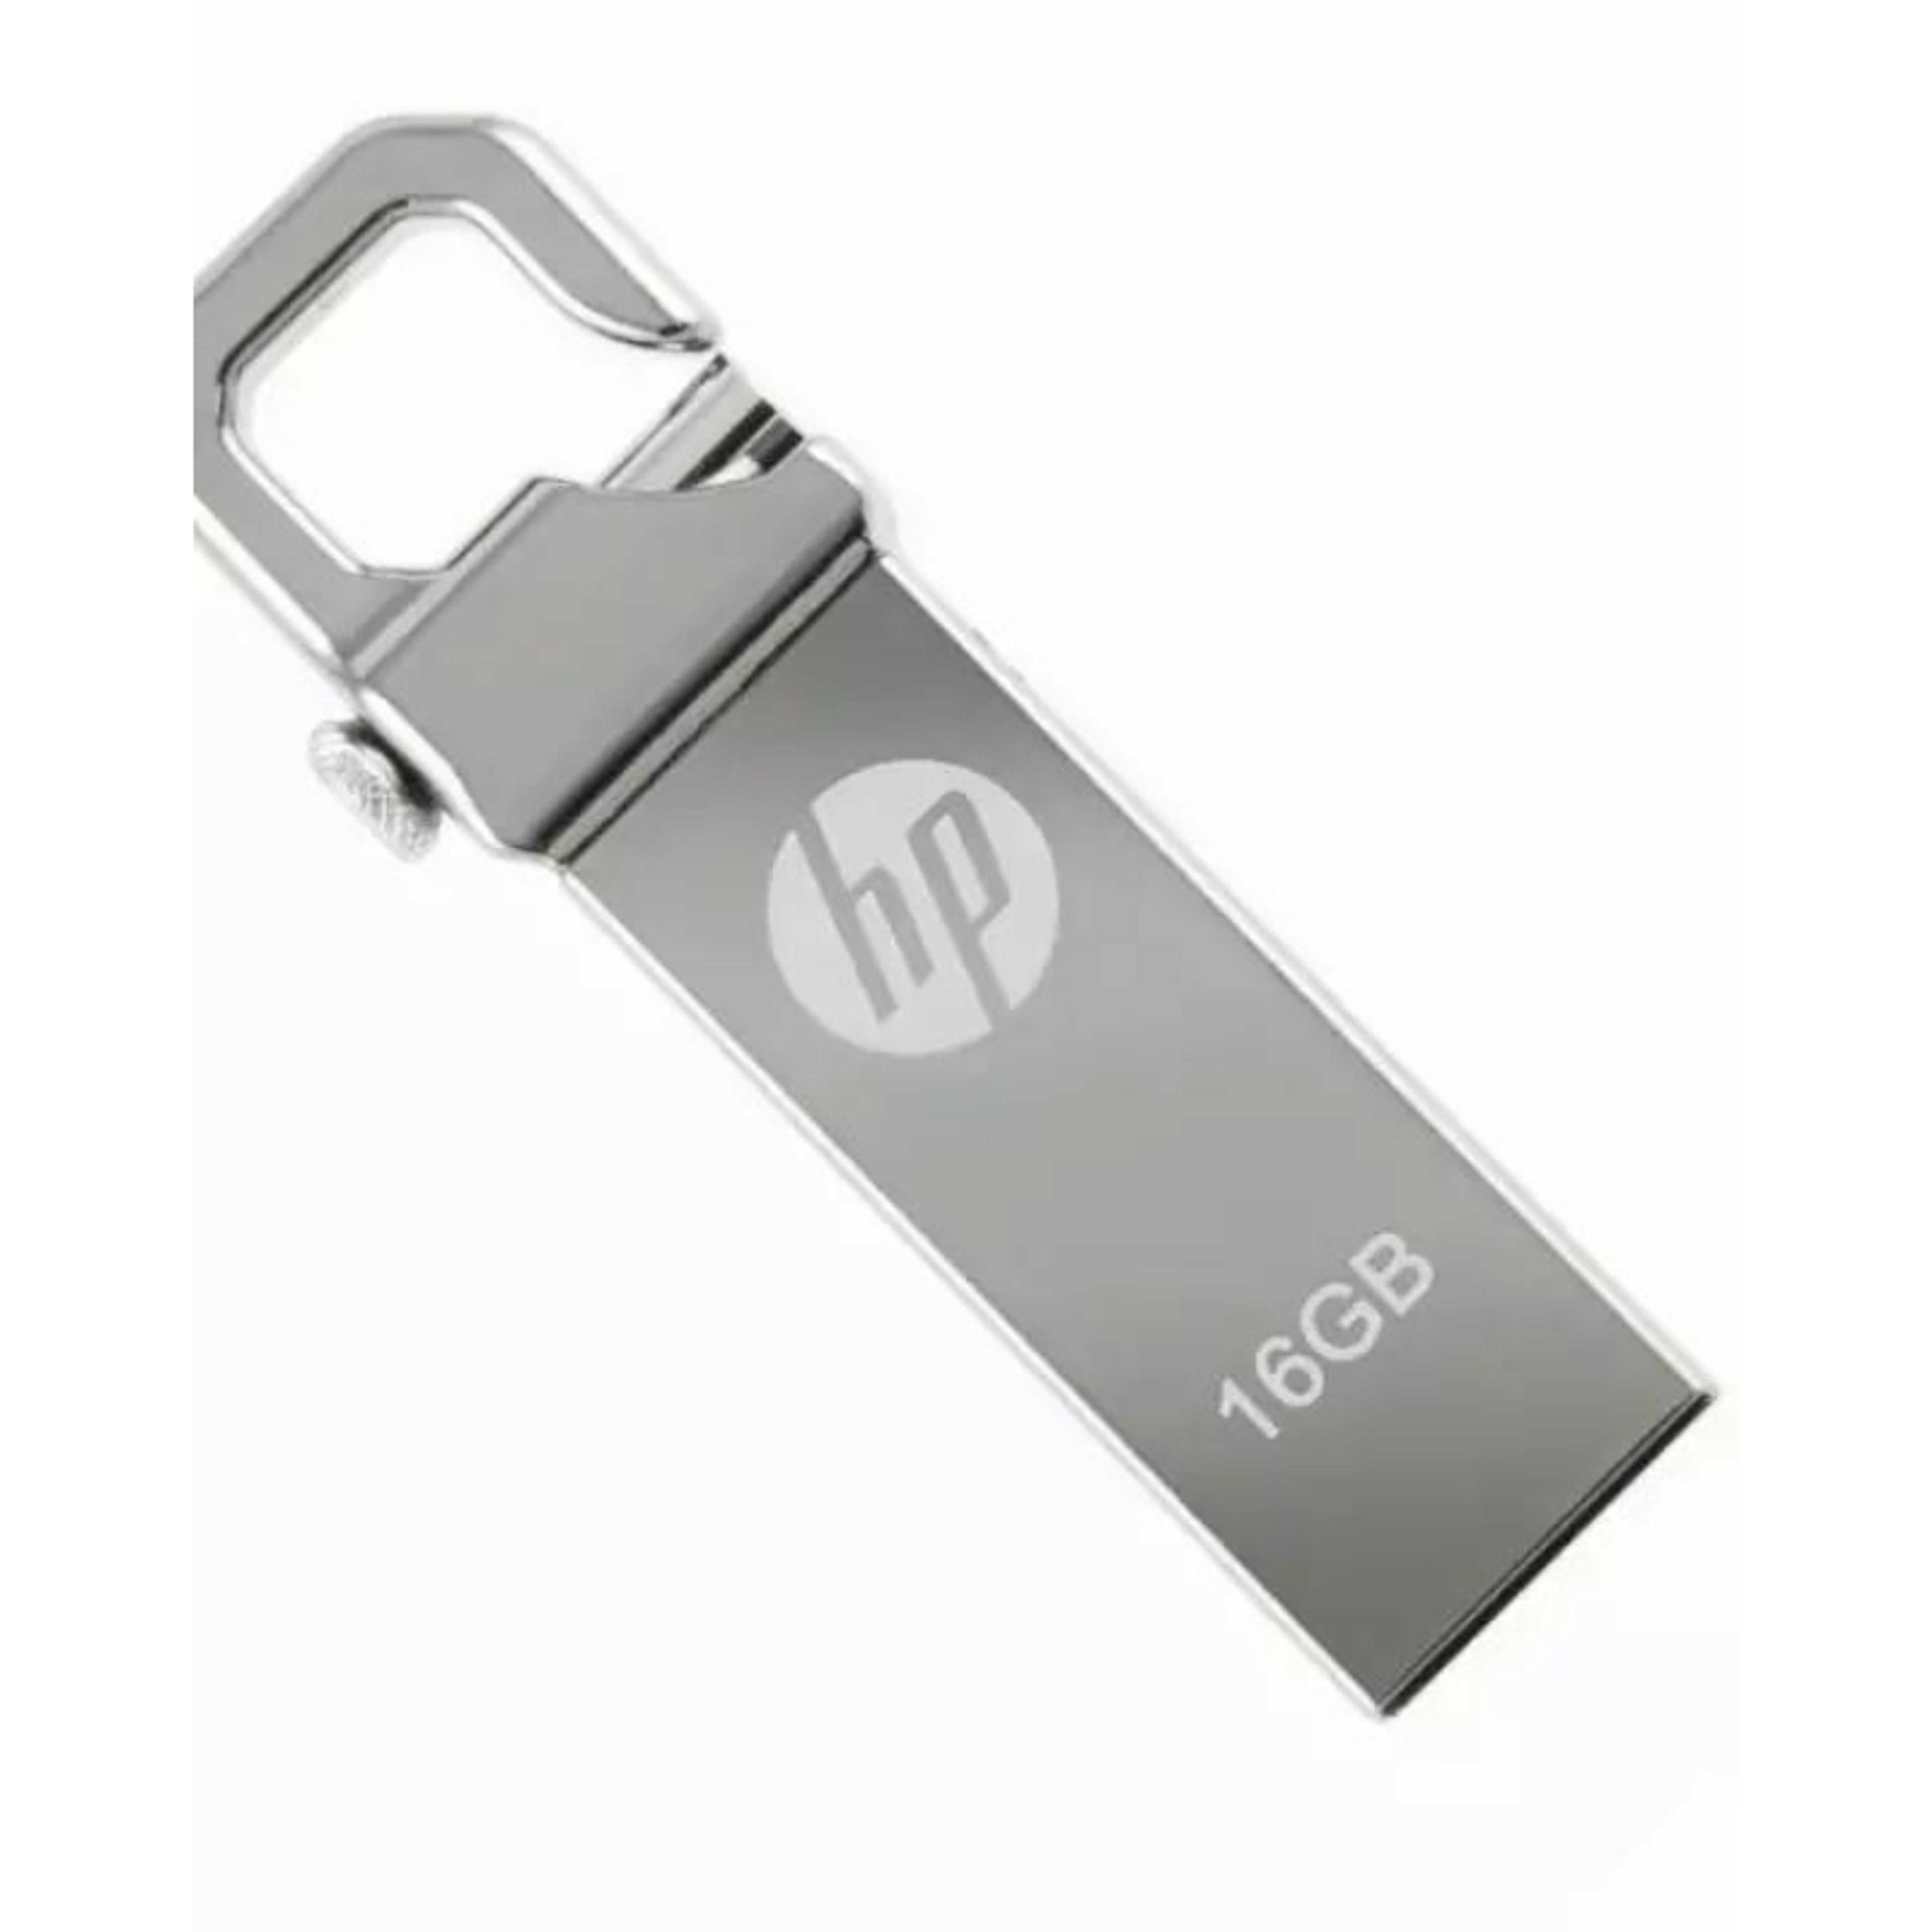 USB Flash Drive - 16GB - Metallic